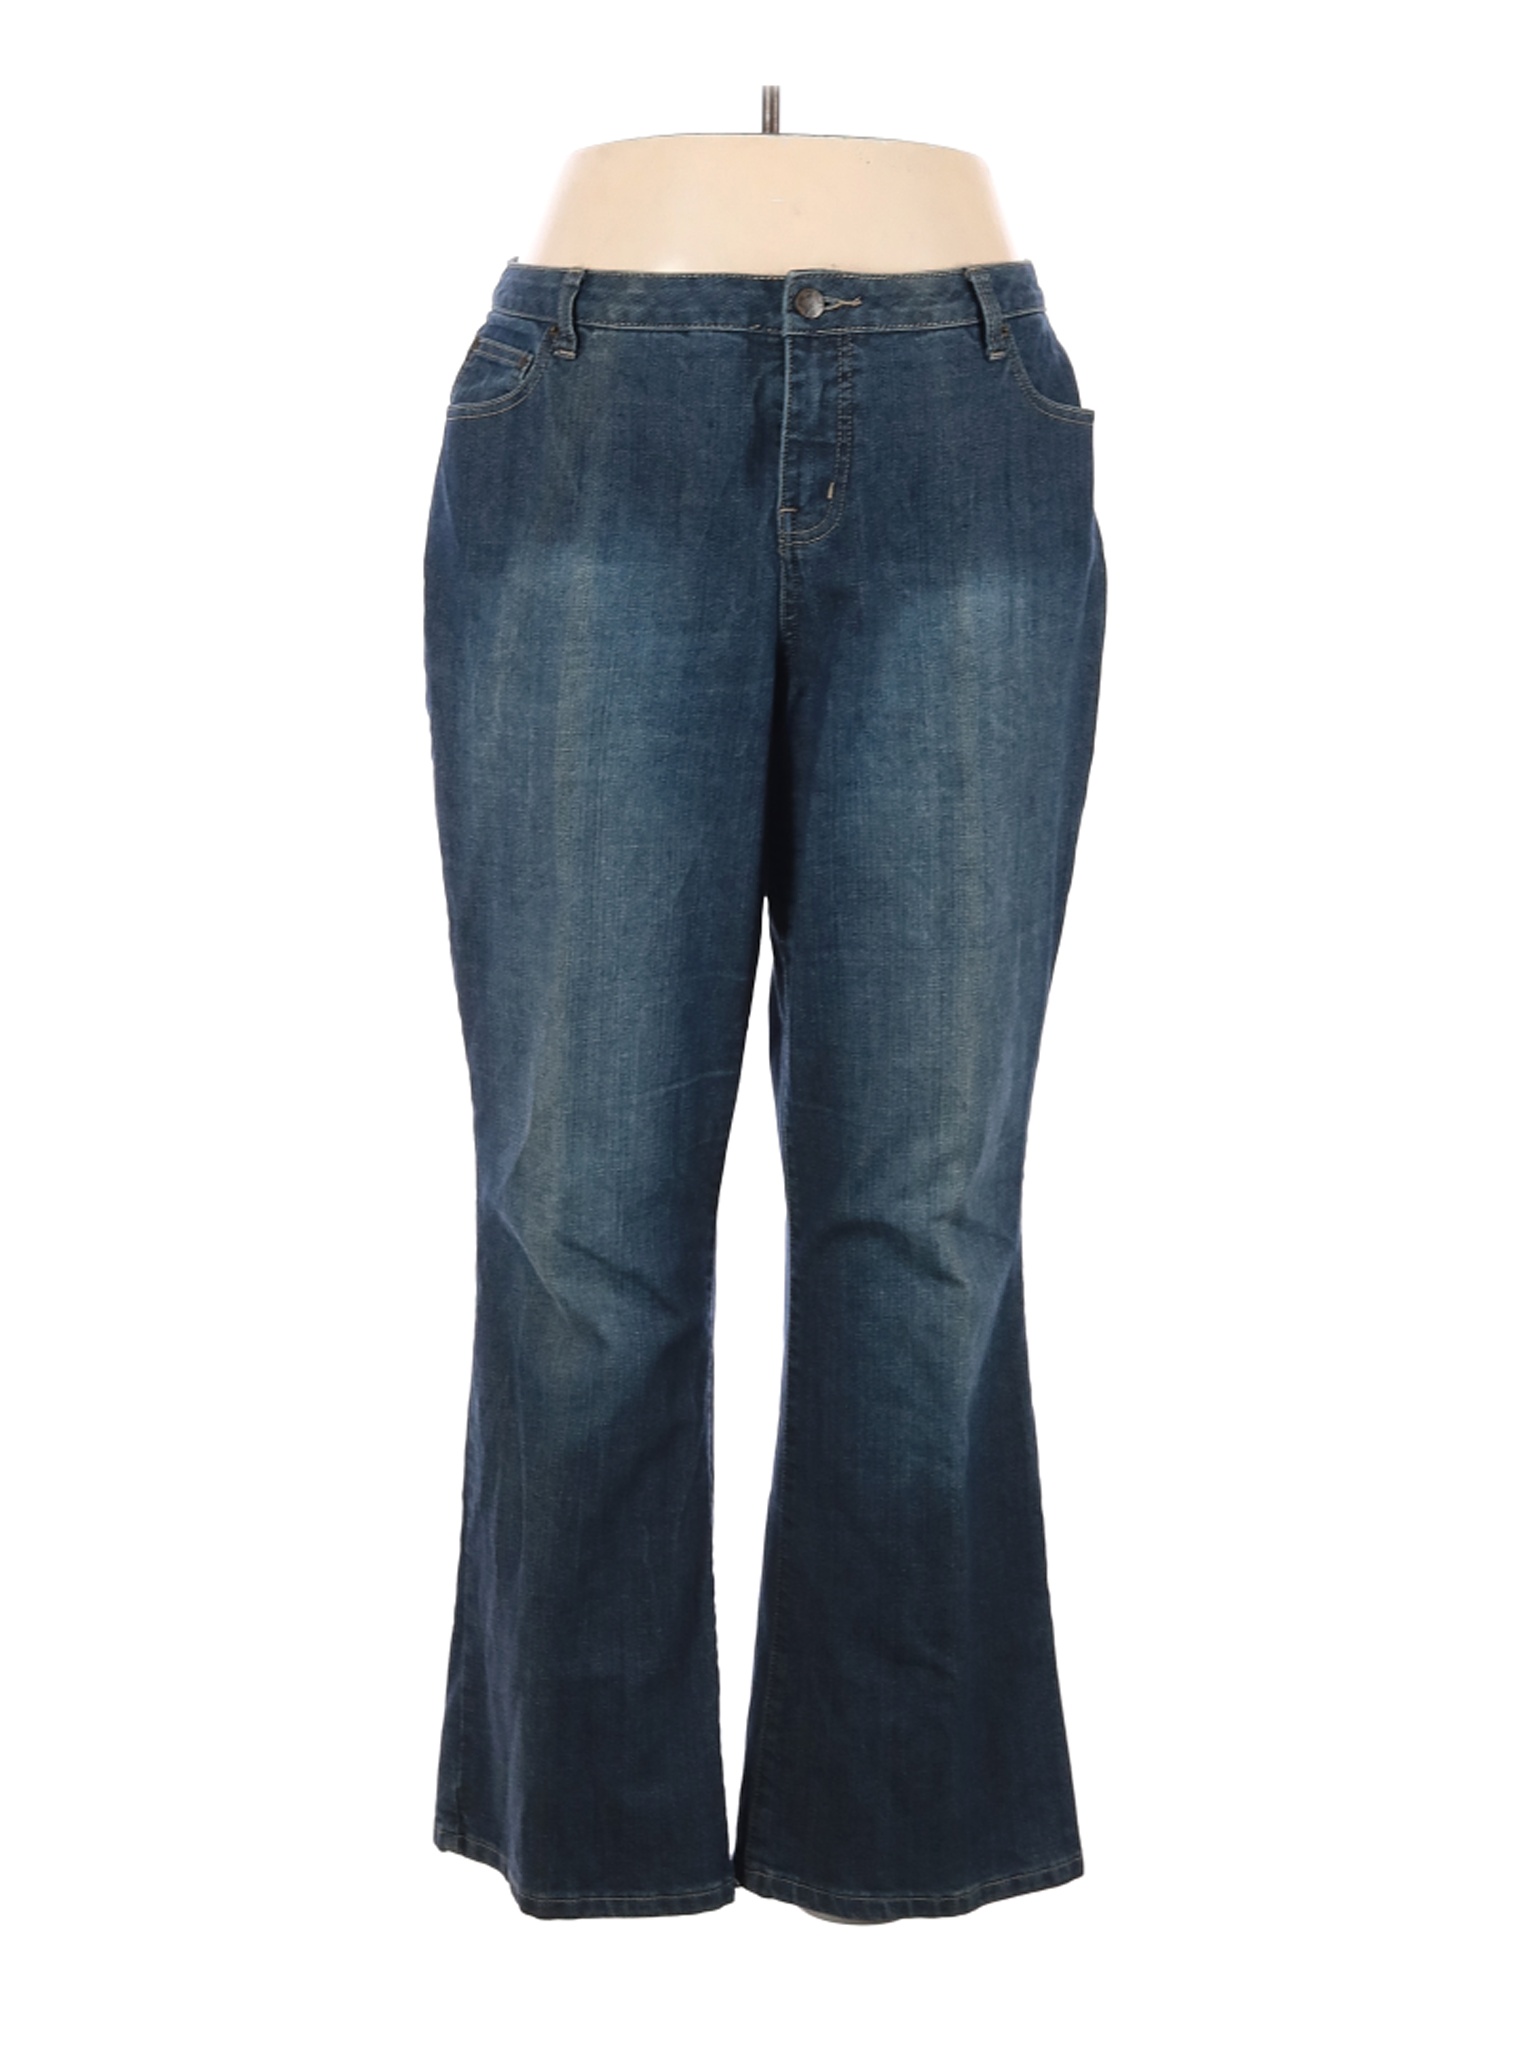 Fashion Bug Women Blue Jeans 16 | eBay